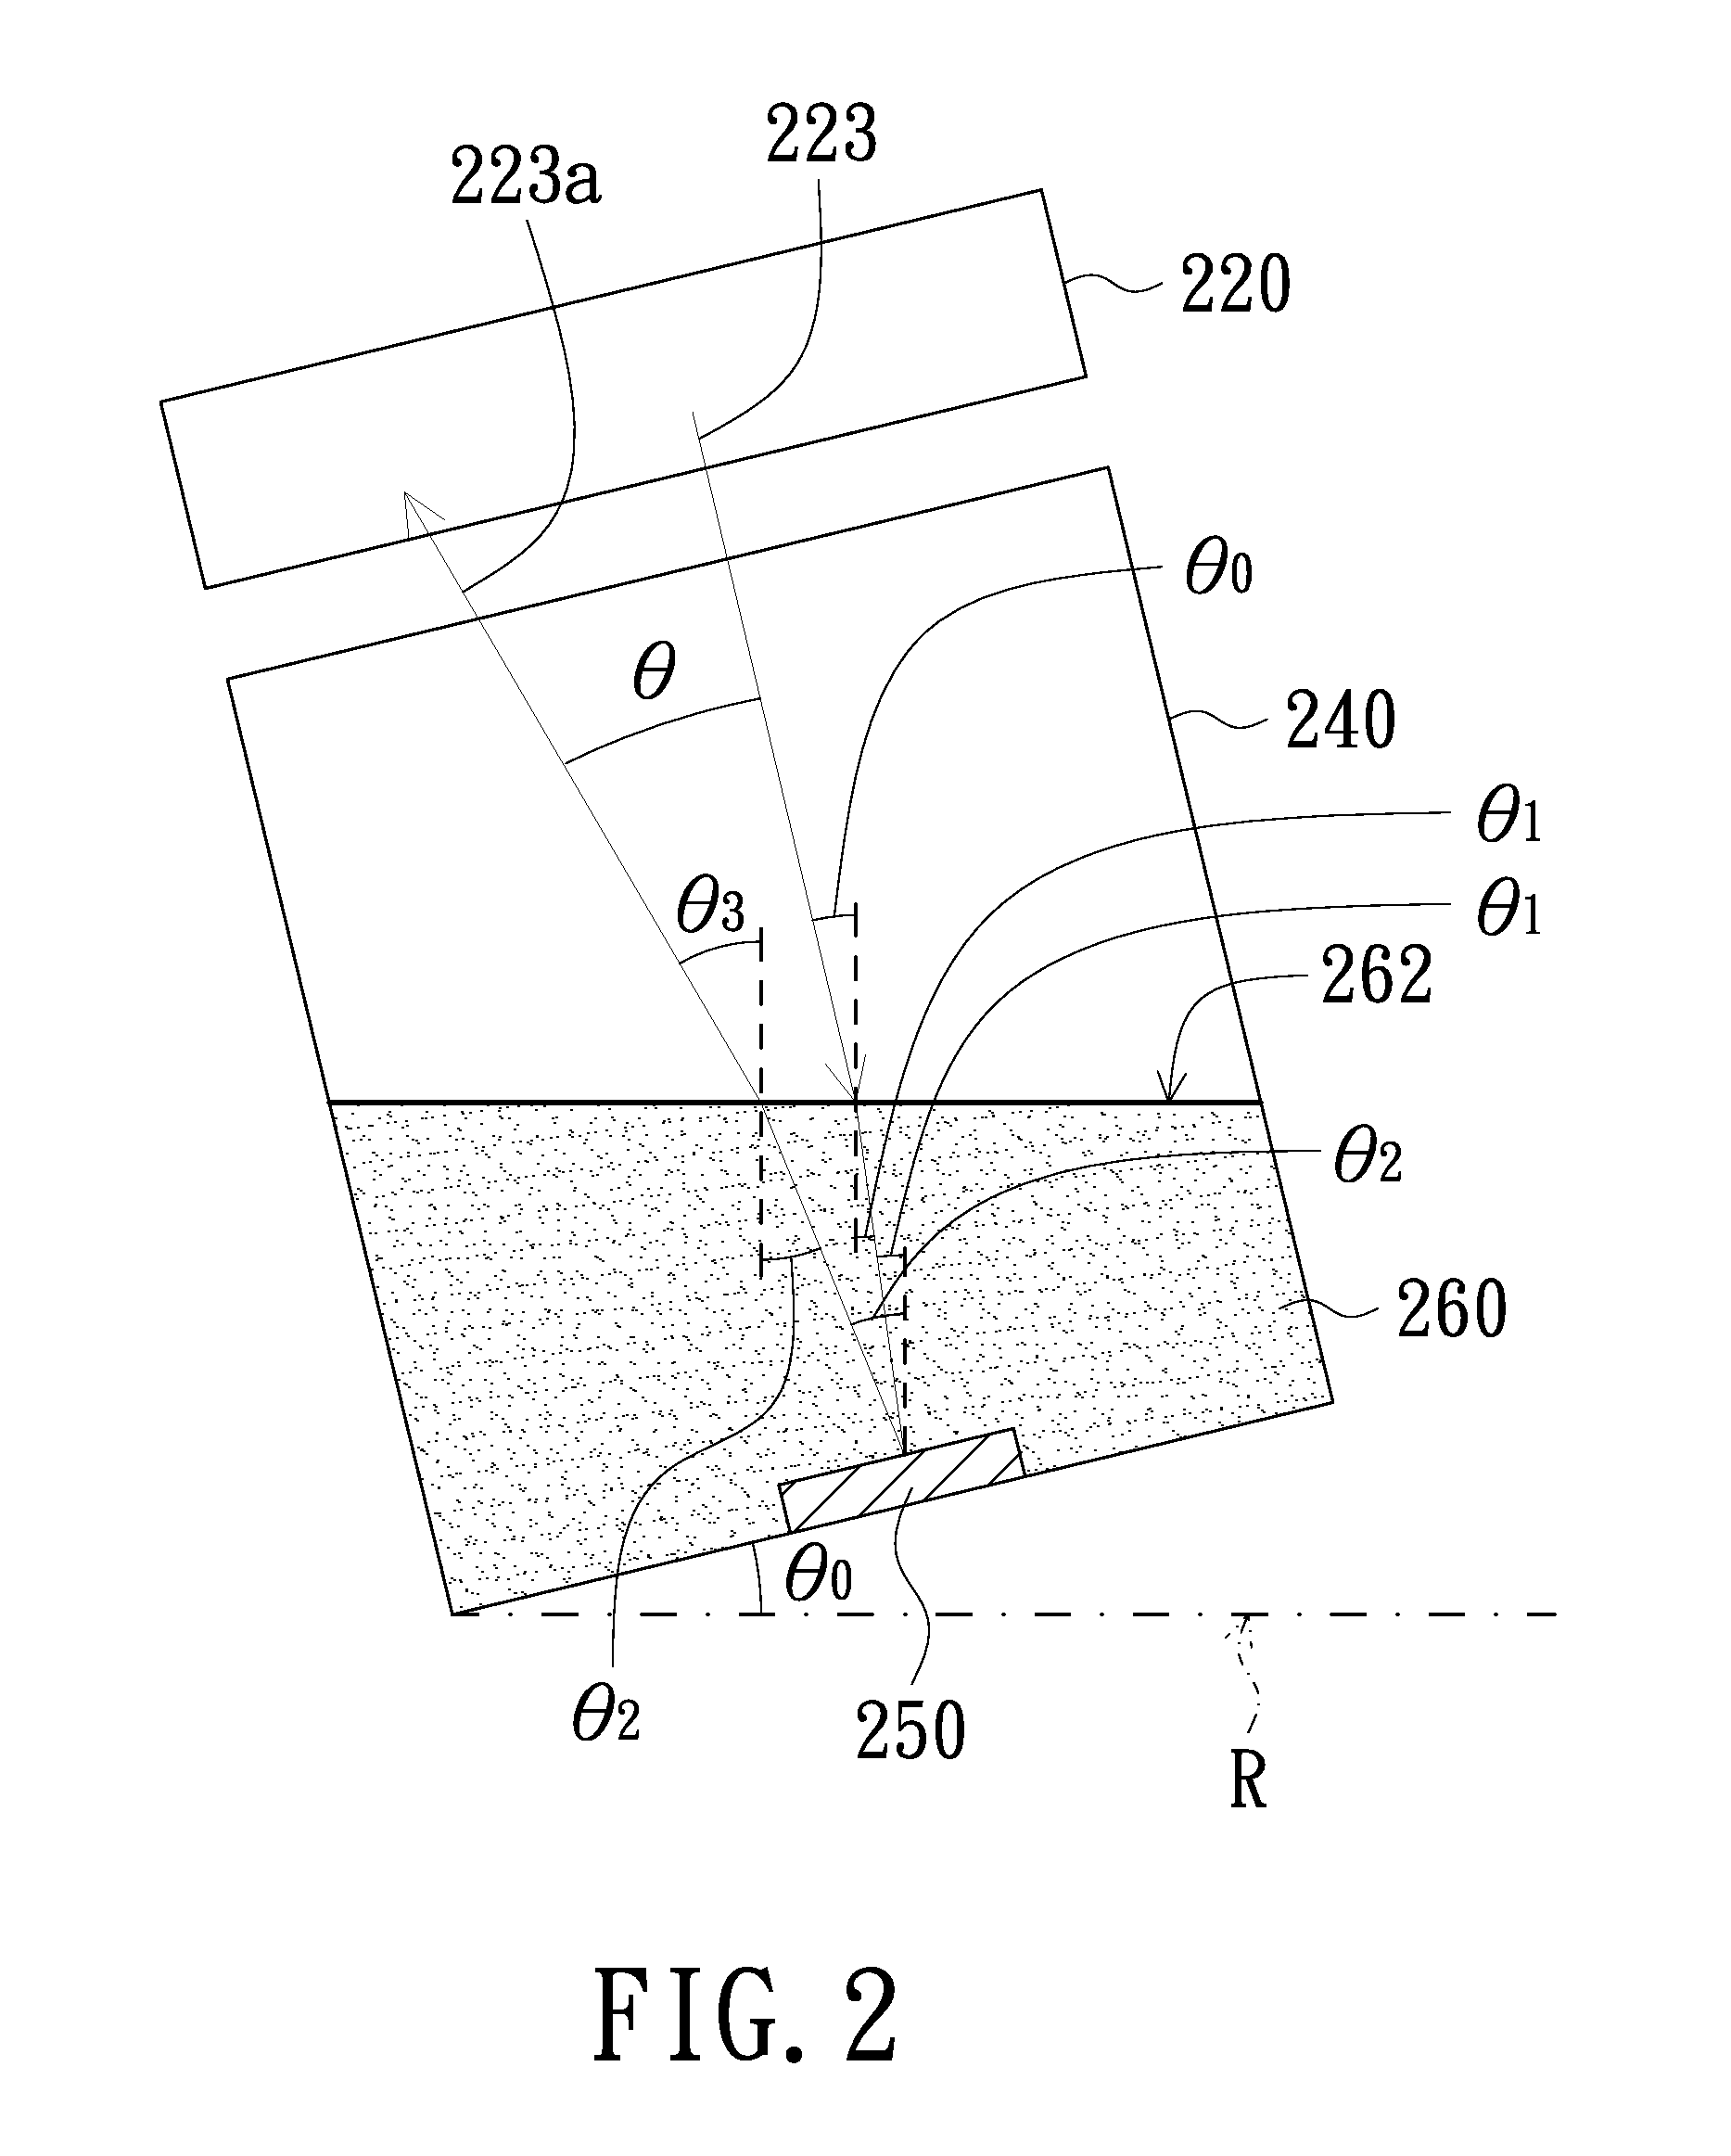 Simple type dual axes optoelectronic level